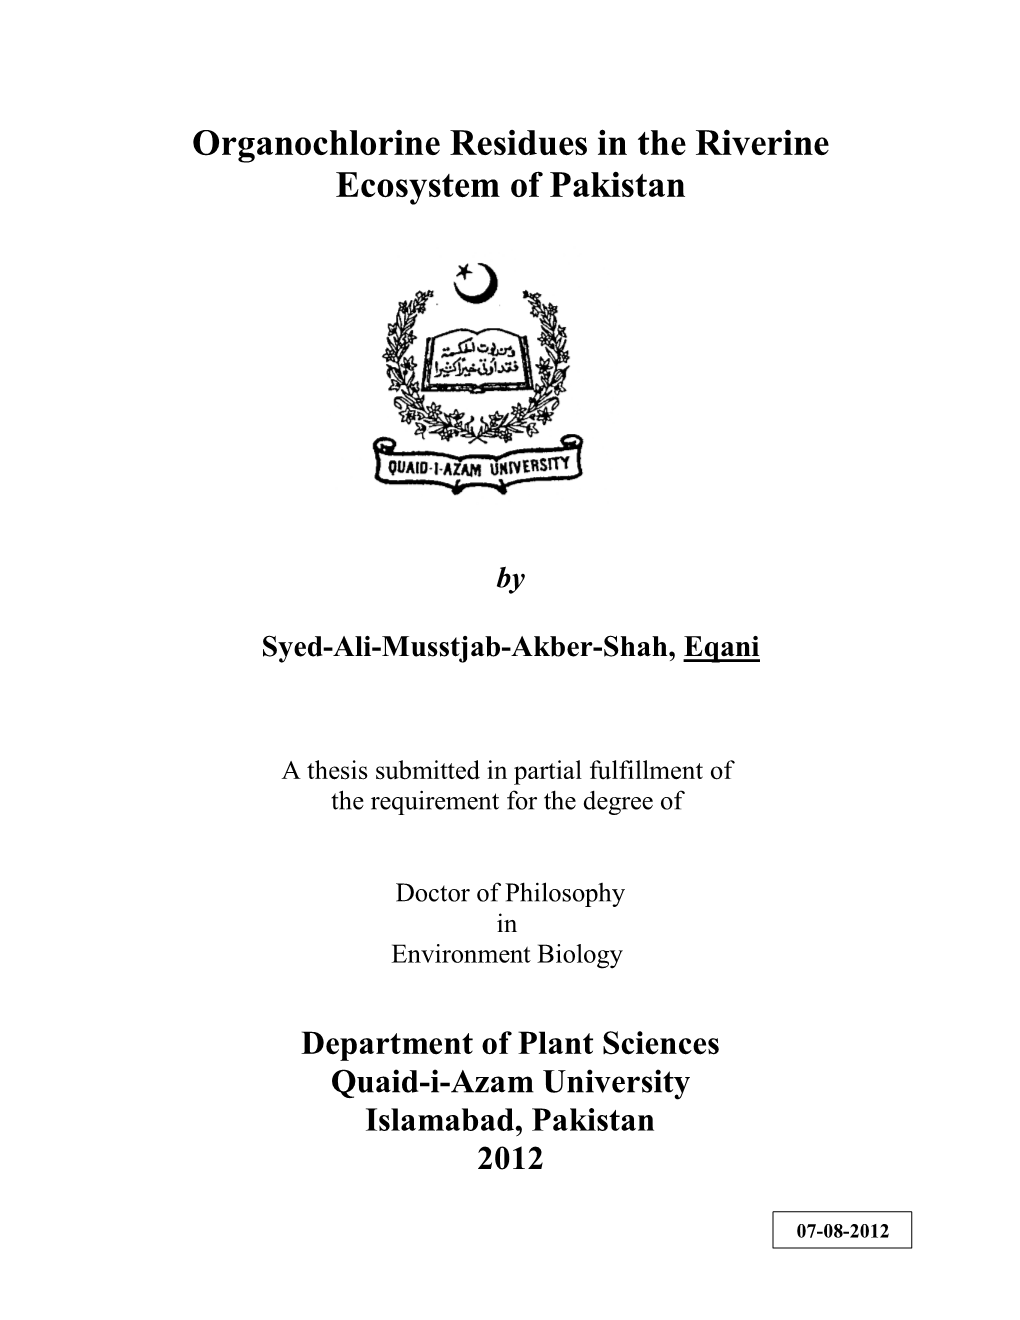 Organochlorine Residues in the Riverine Ecosystem of Pakistan